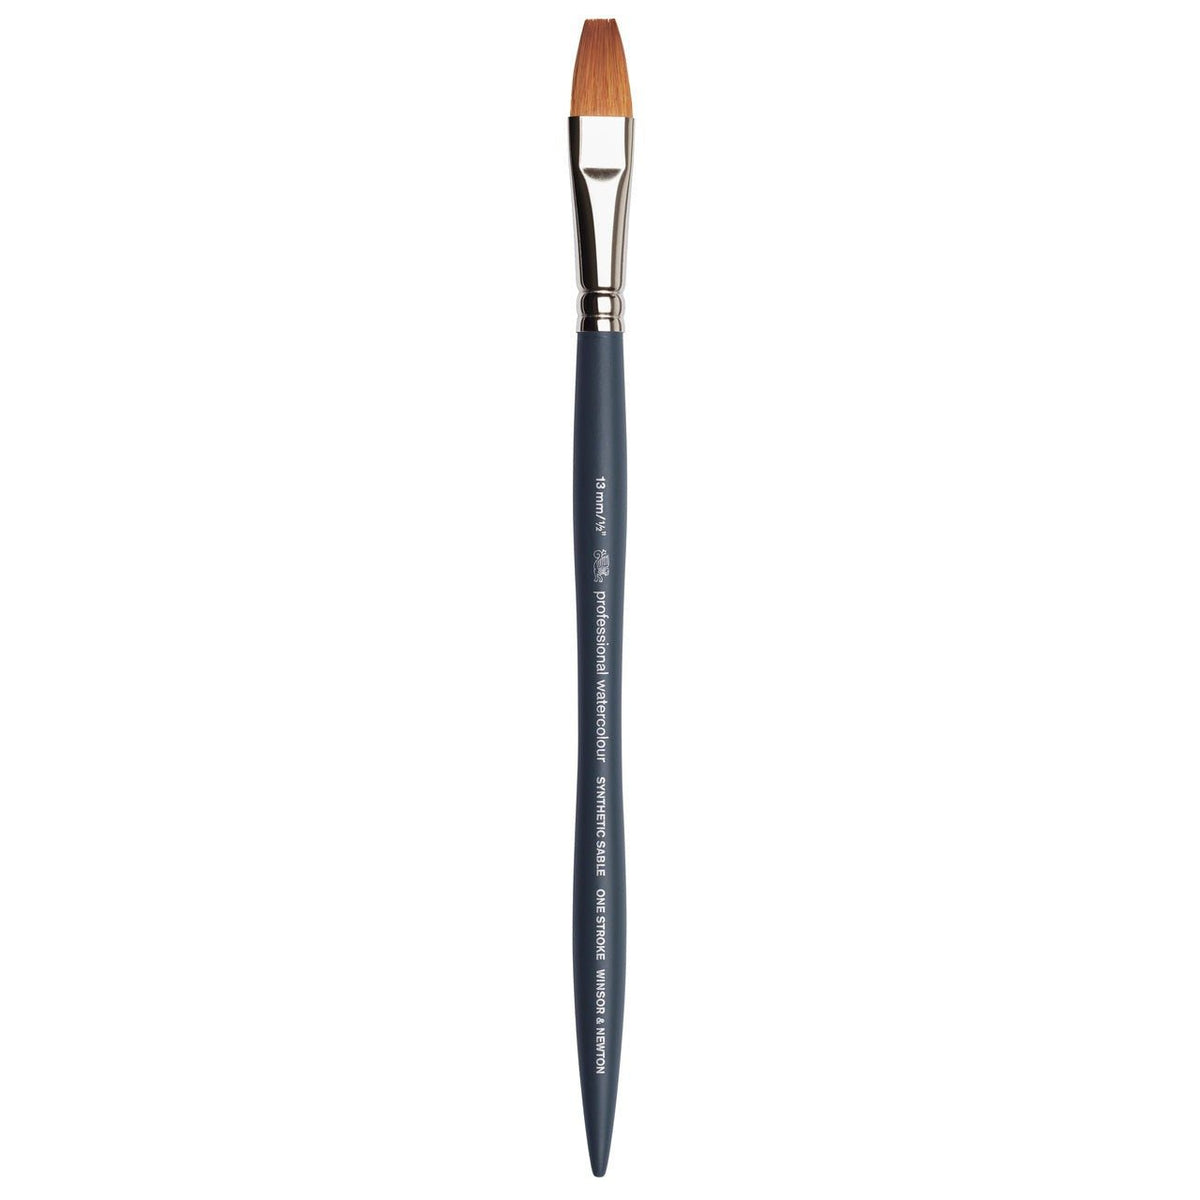 Winsor & Newton : Series 7 Kolinsky Sable Paint Brush : Product Review 